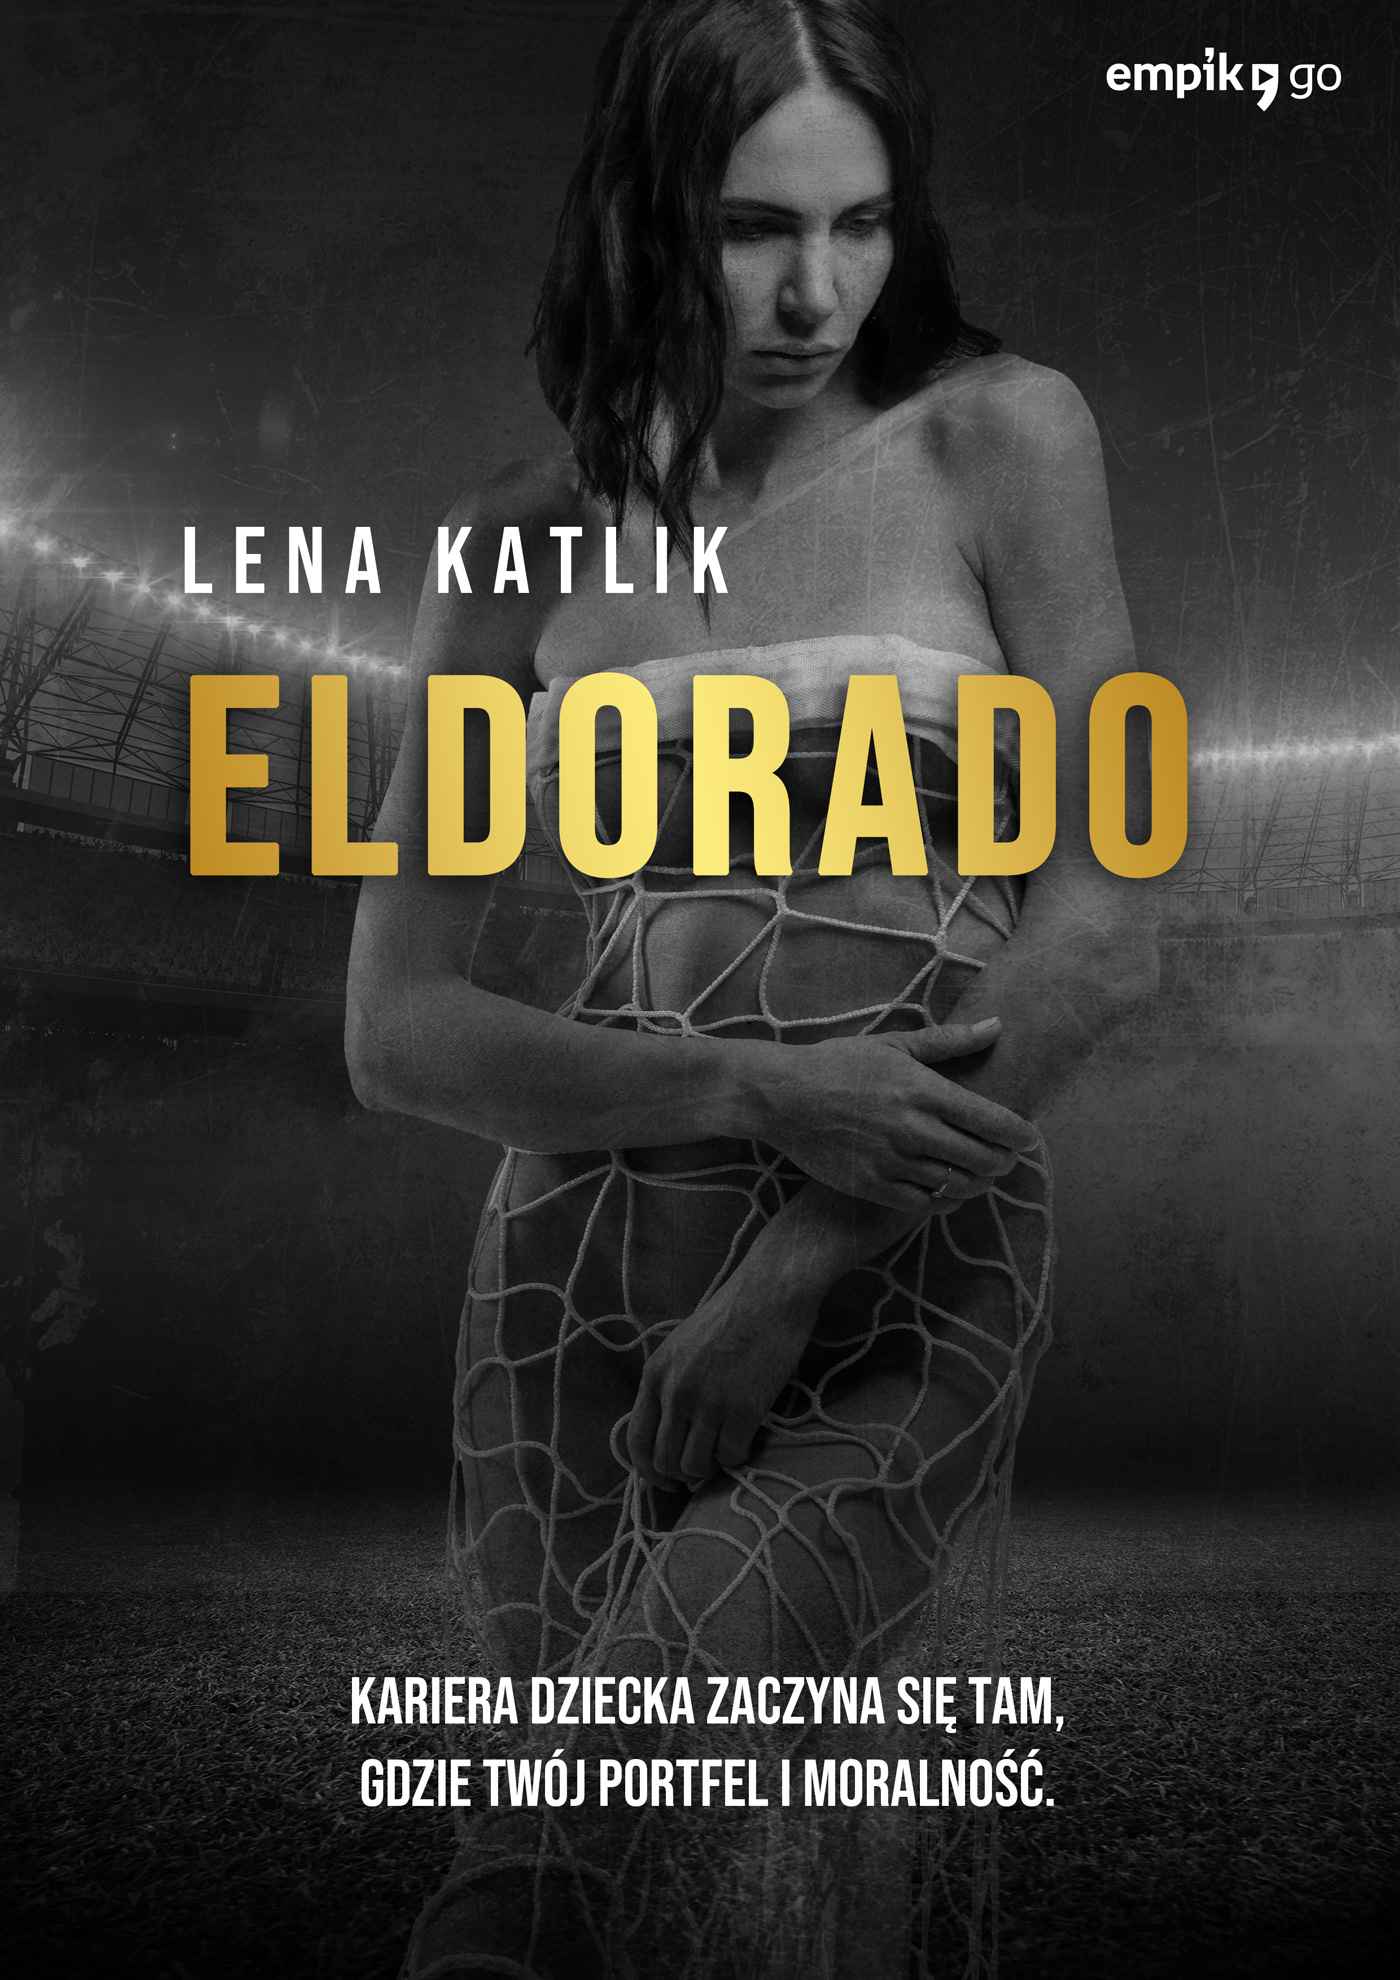 Lena Katlik w książce „Eldorado” demaskuje świat futbolu